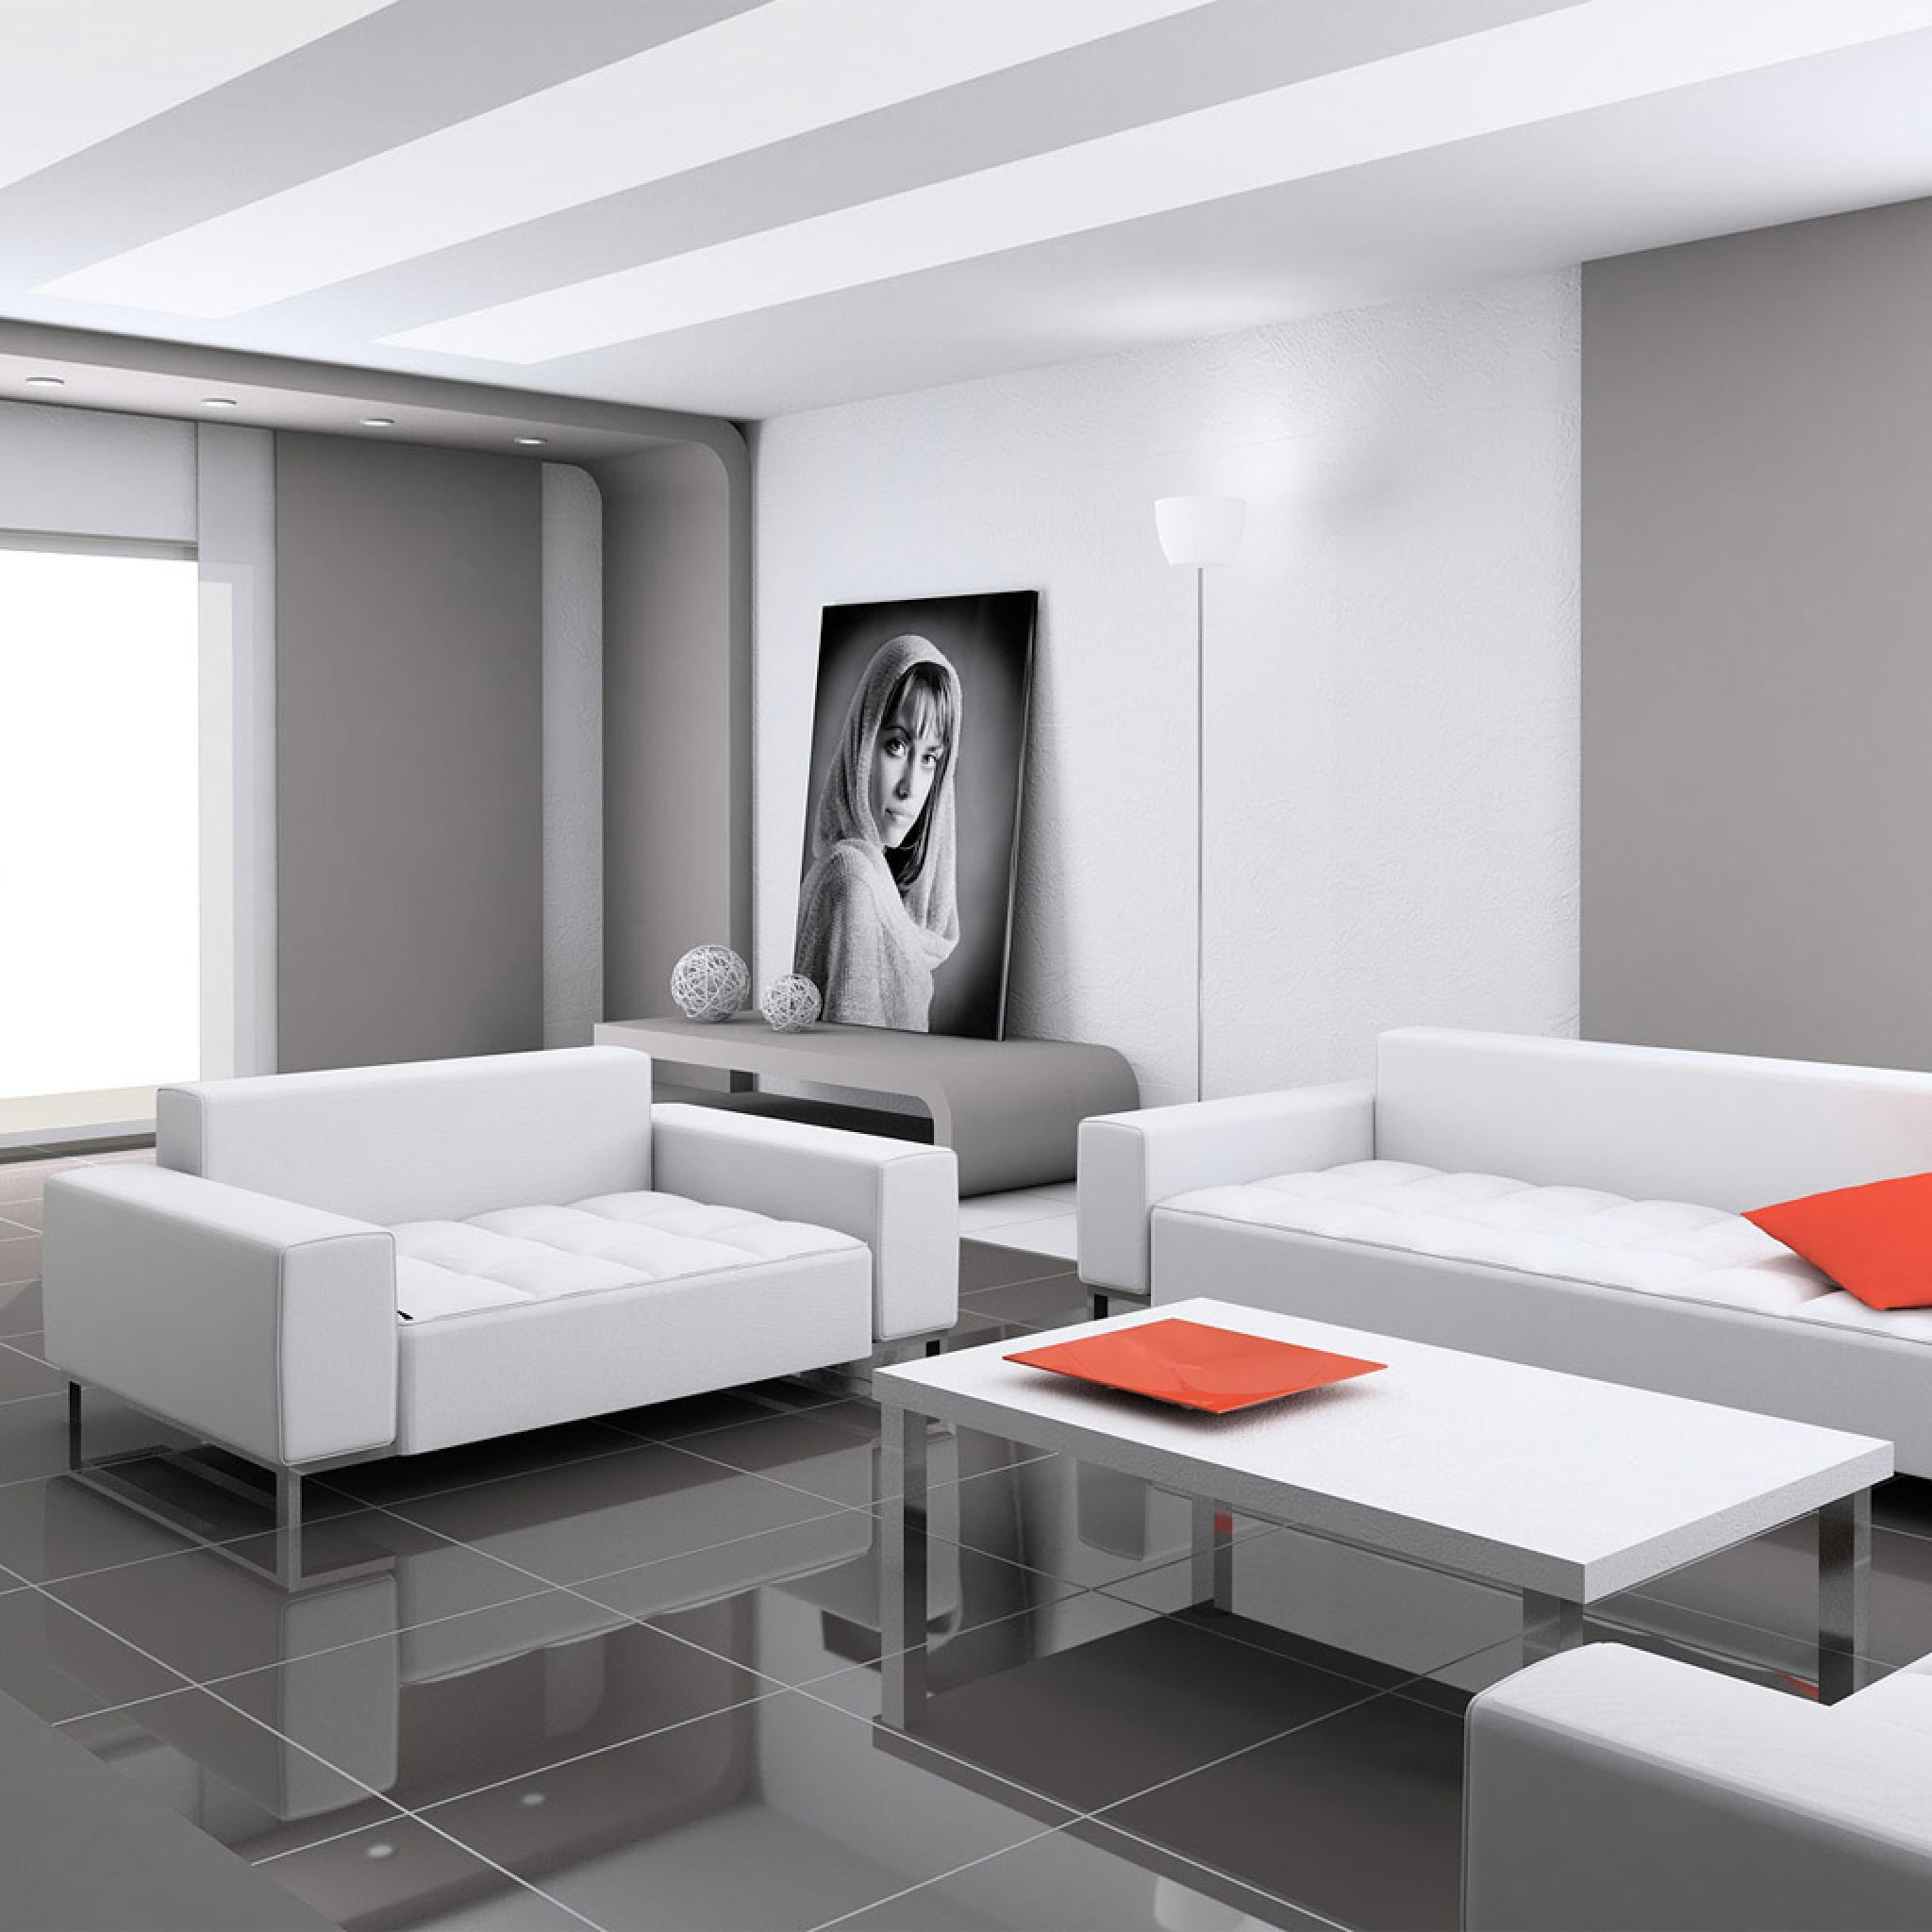 Minimalist Living Room Design
 Miscellaneous Minimalist Living Room Design Ideas iPad